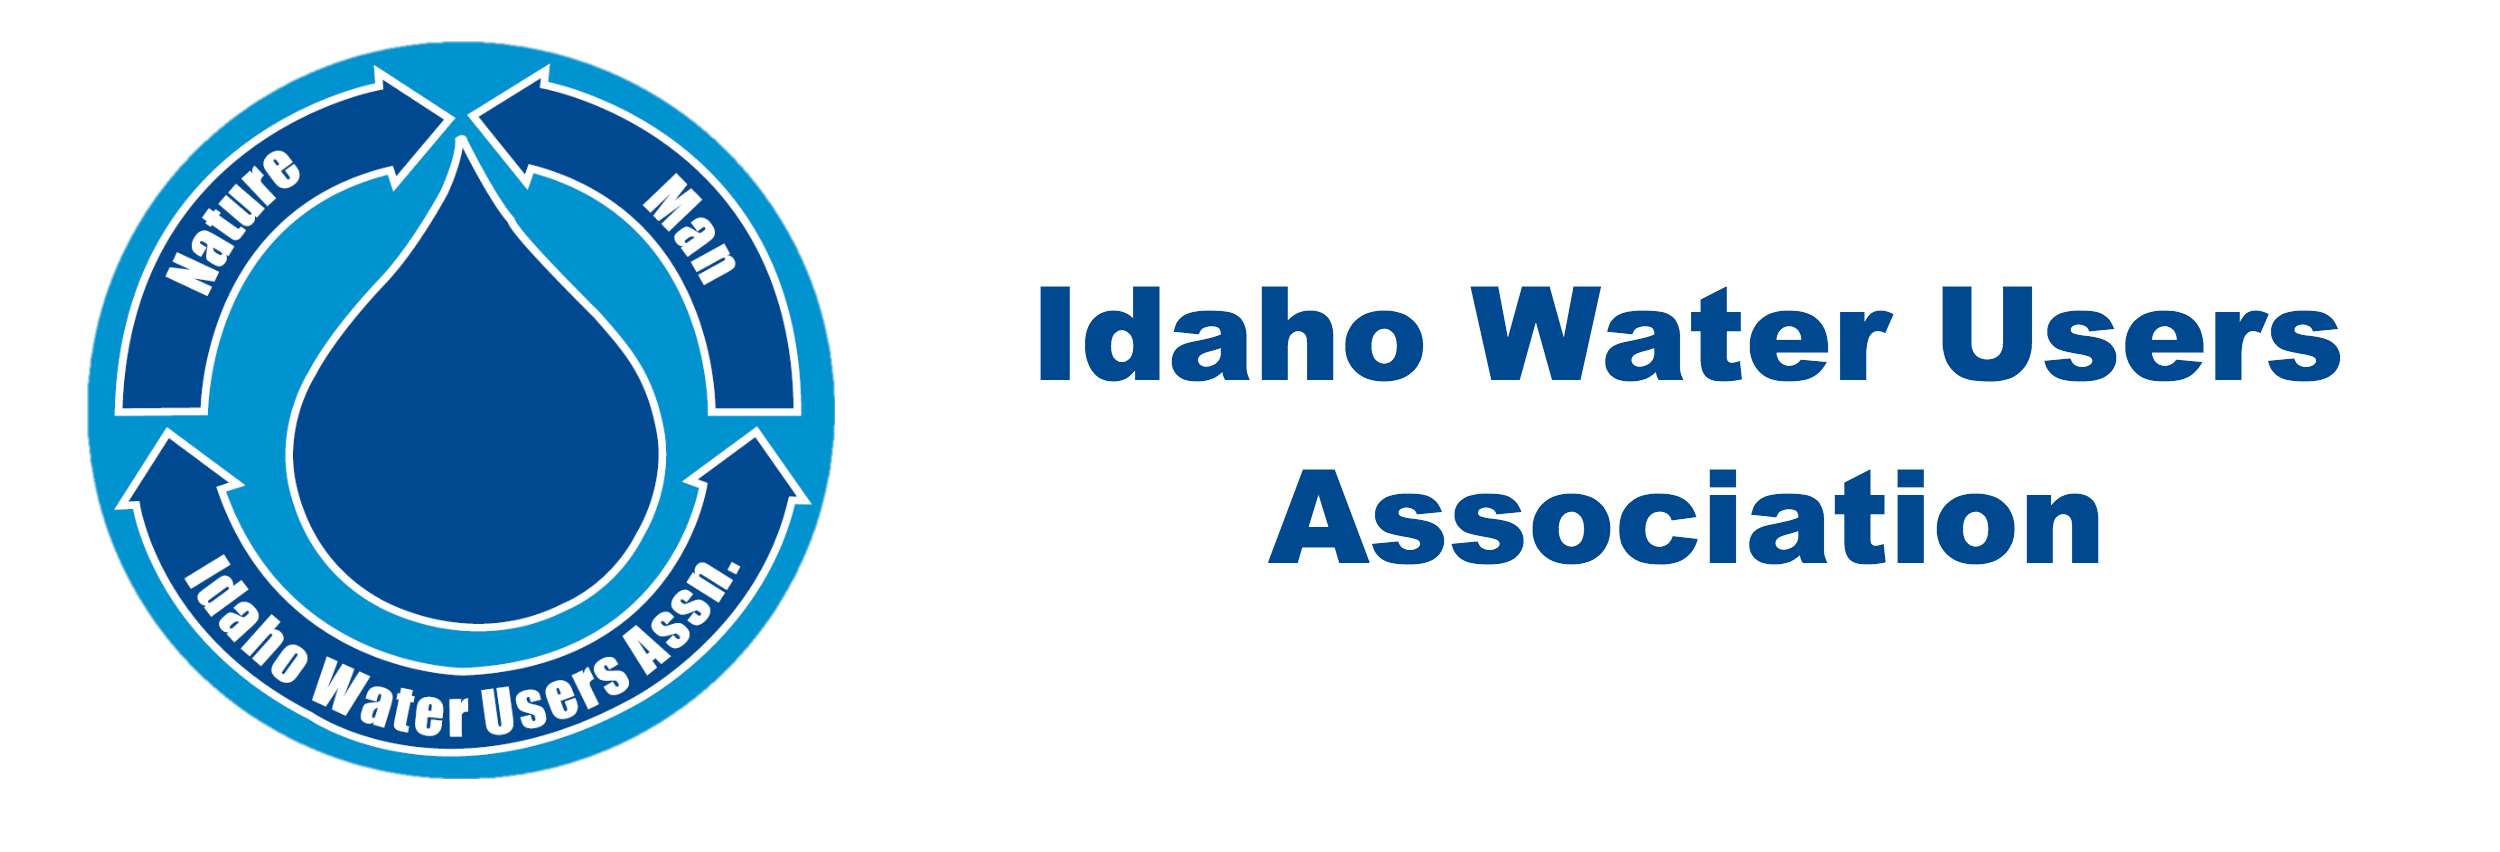 Idaho Water Users Association logo